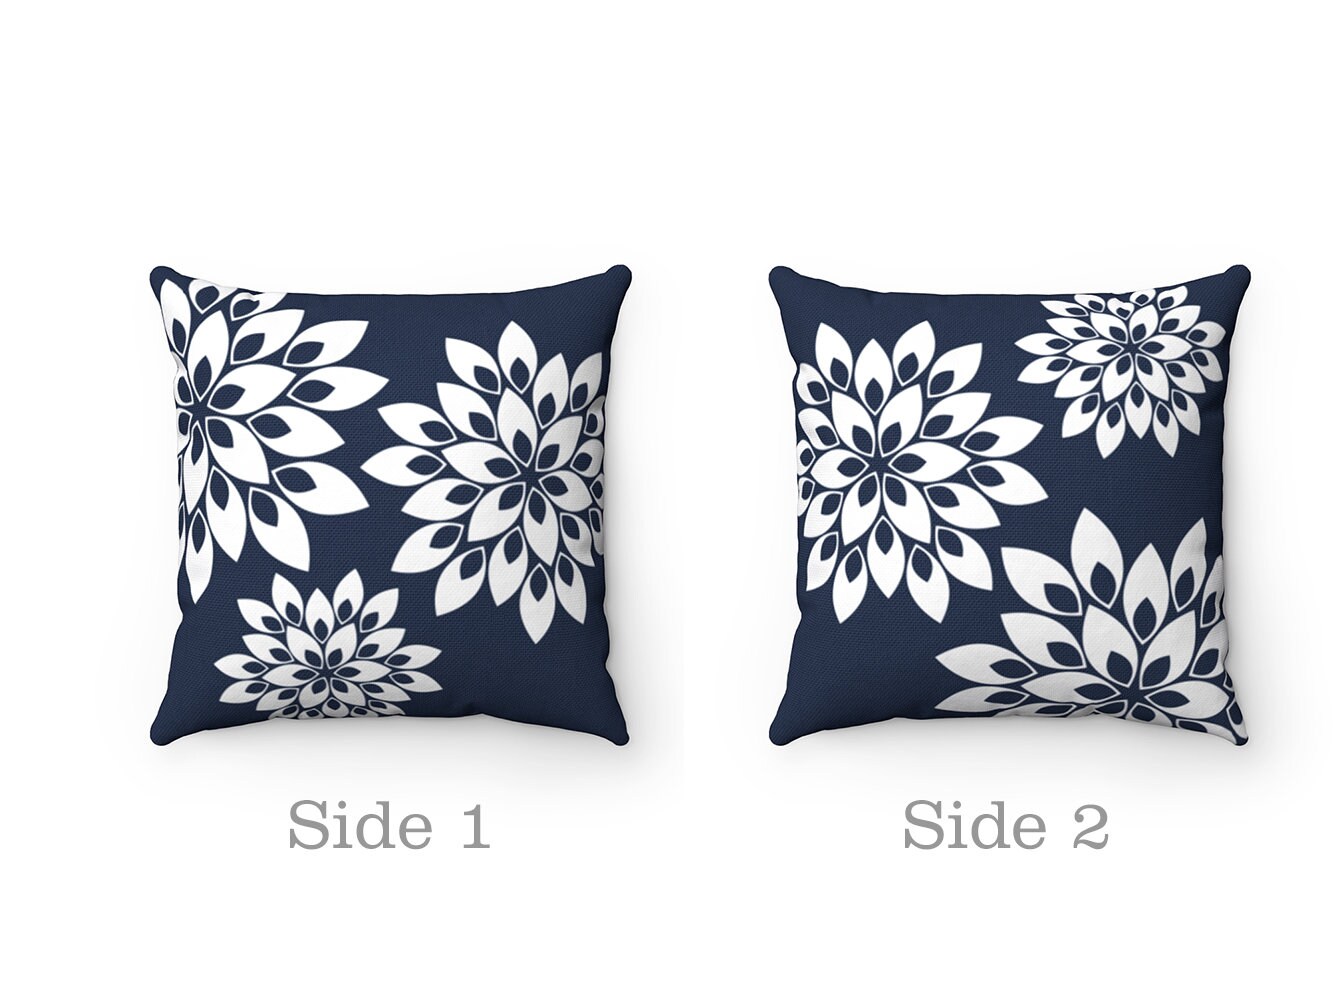  Almohadas decorativas para cama, diseño de flor de loto azul  sobre fondo tostado, 20 x 20 pulgadas, fundas de almohada de granja con  flores de loto, fundas de almohada para exteriores